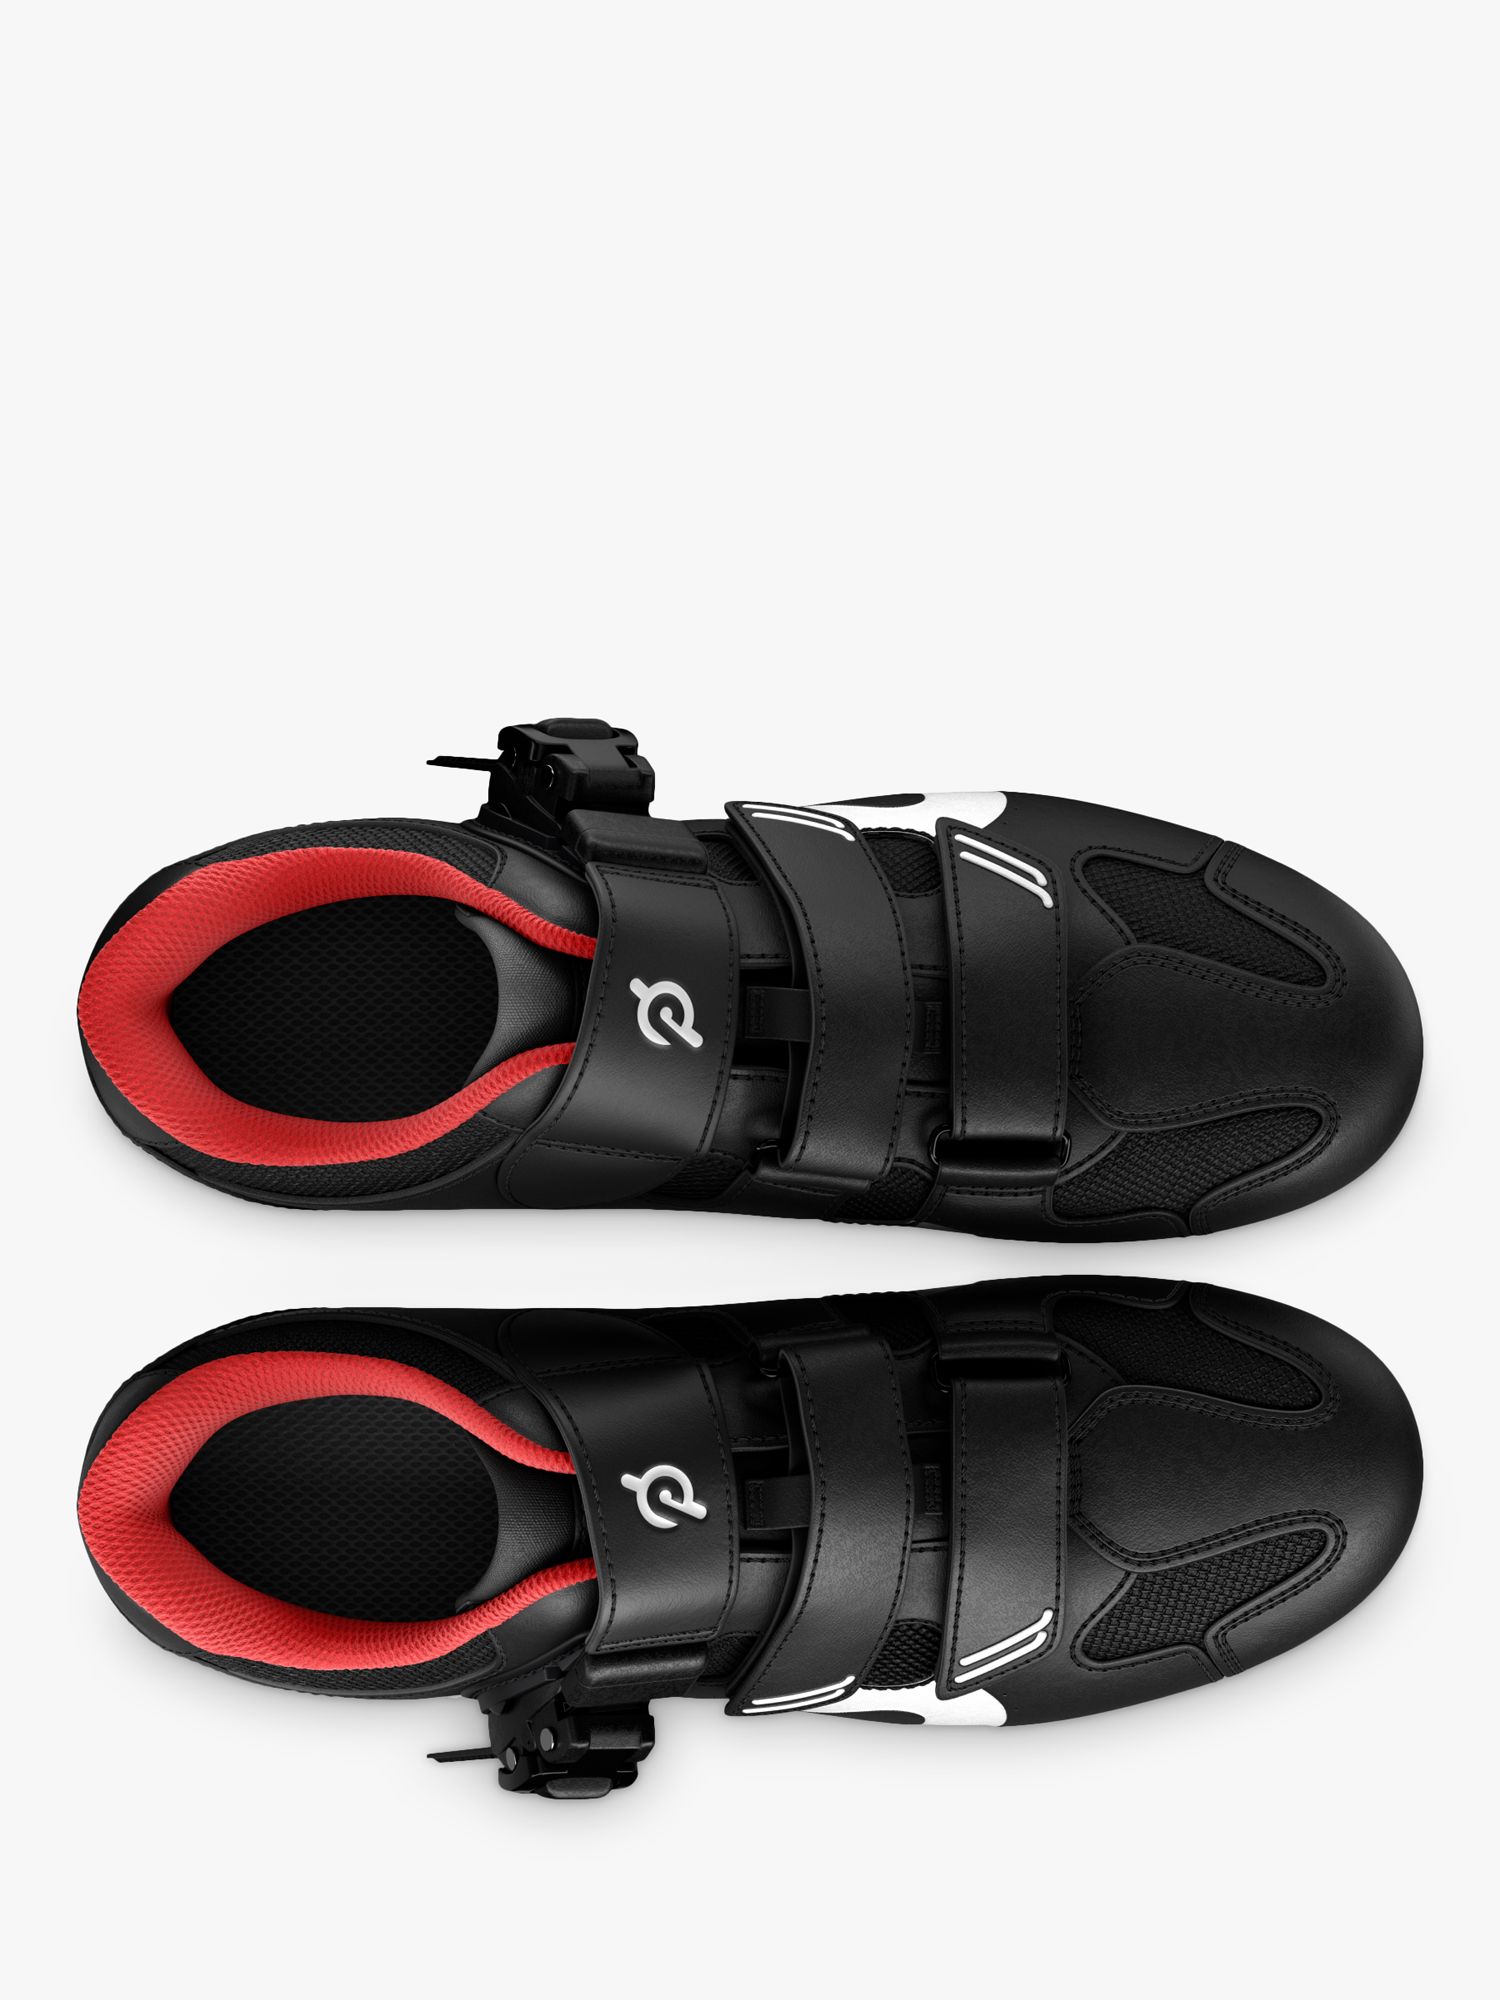 Peloton Cycling Shoes, Black/Red, 10